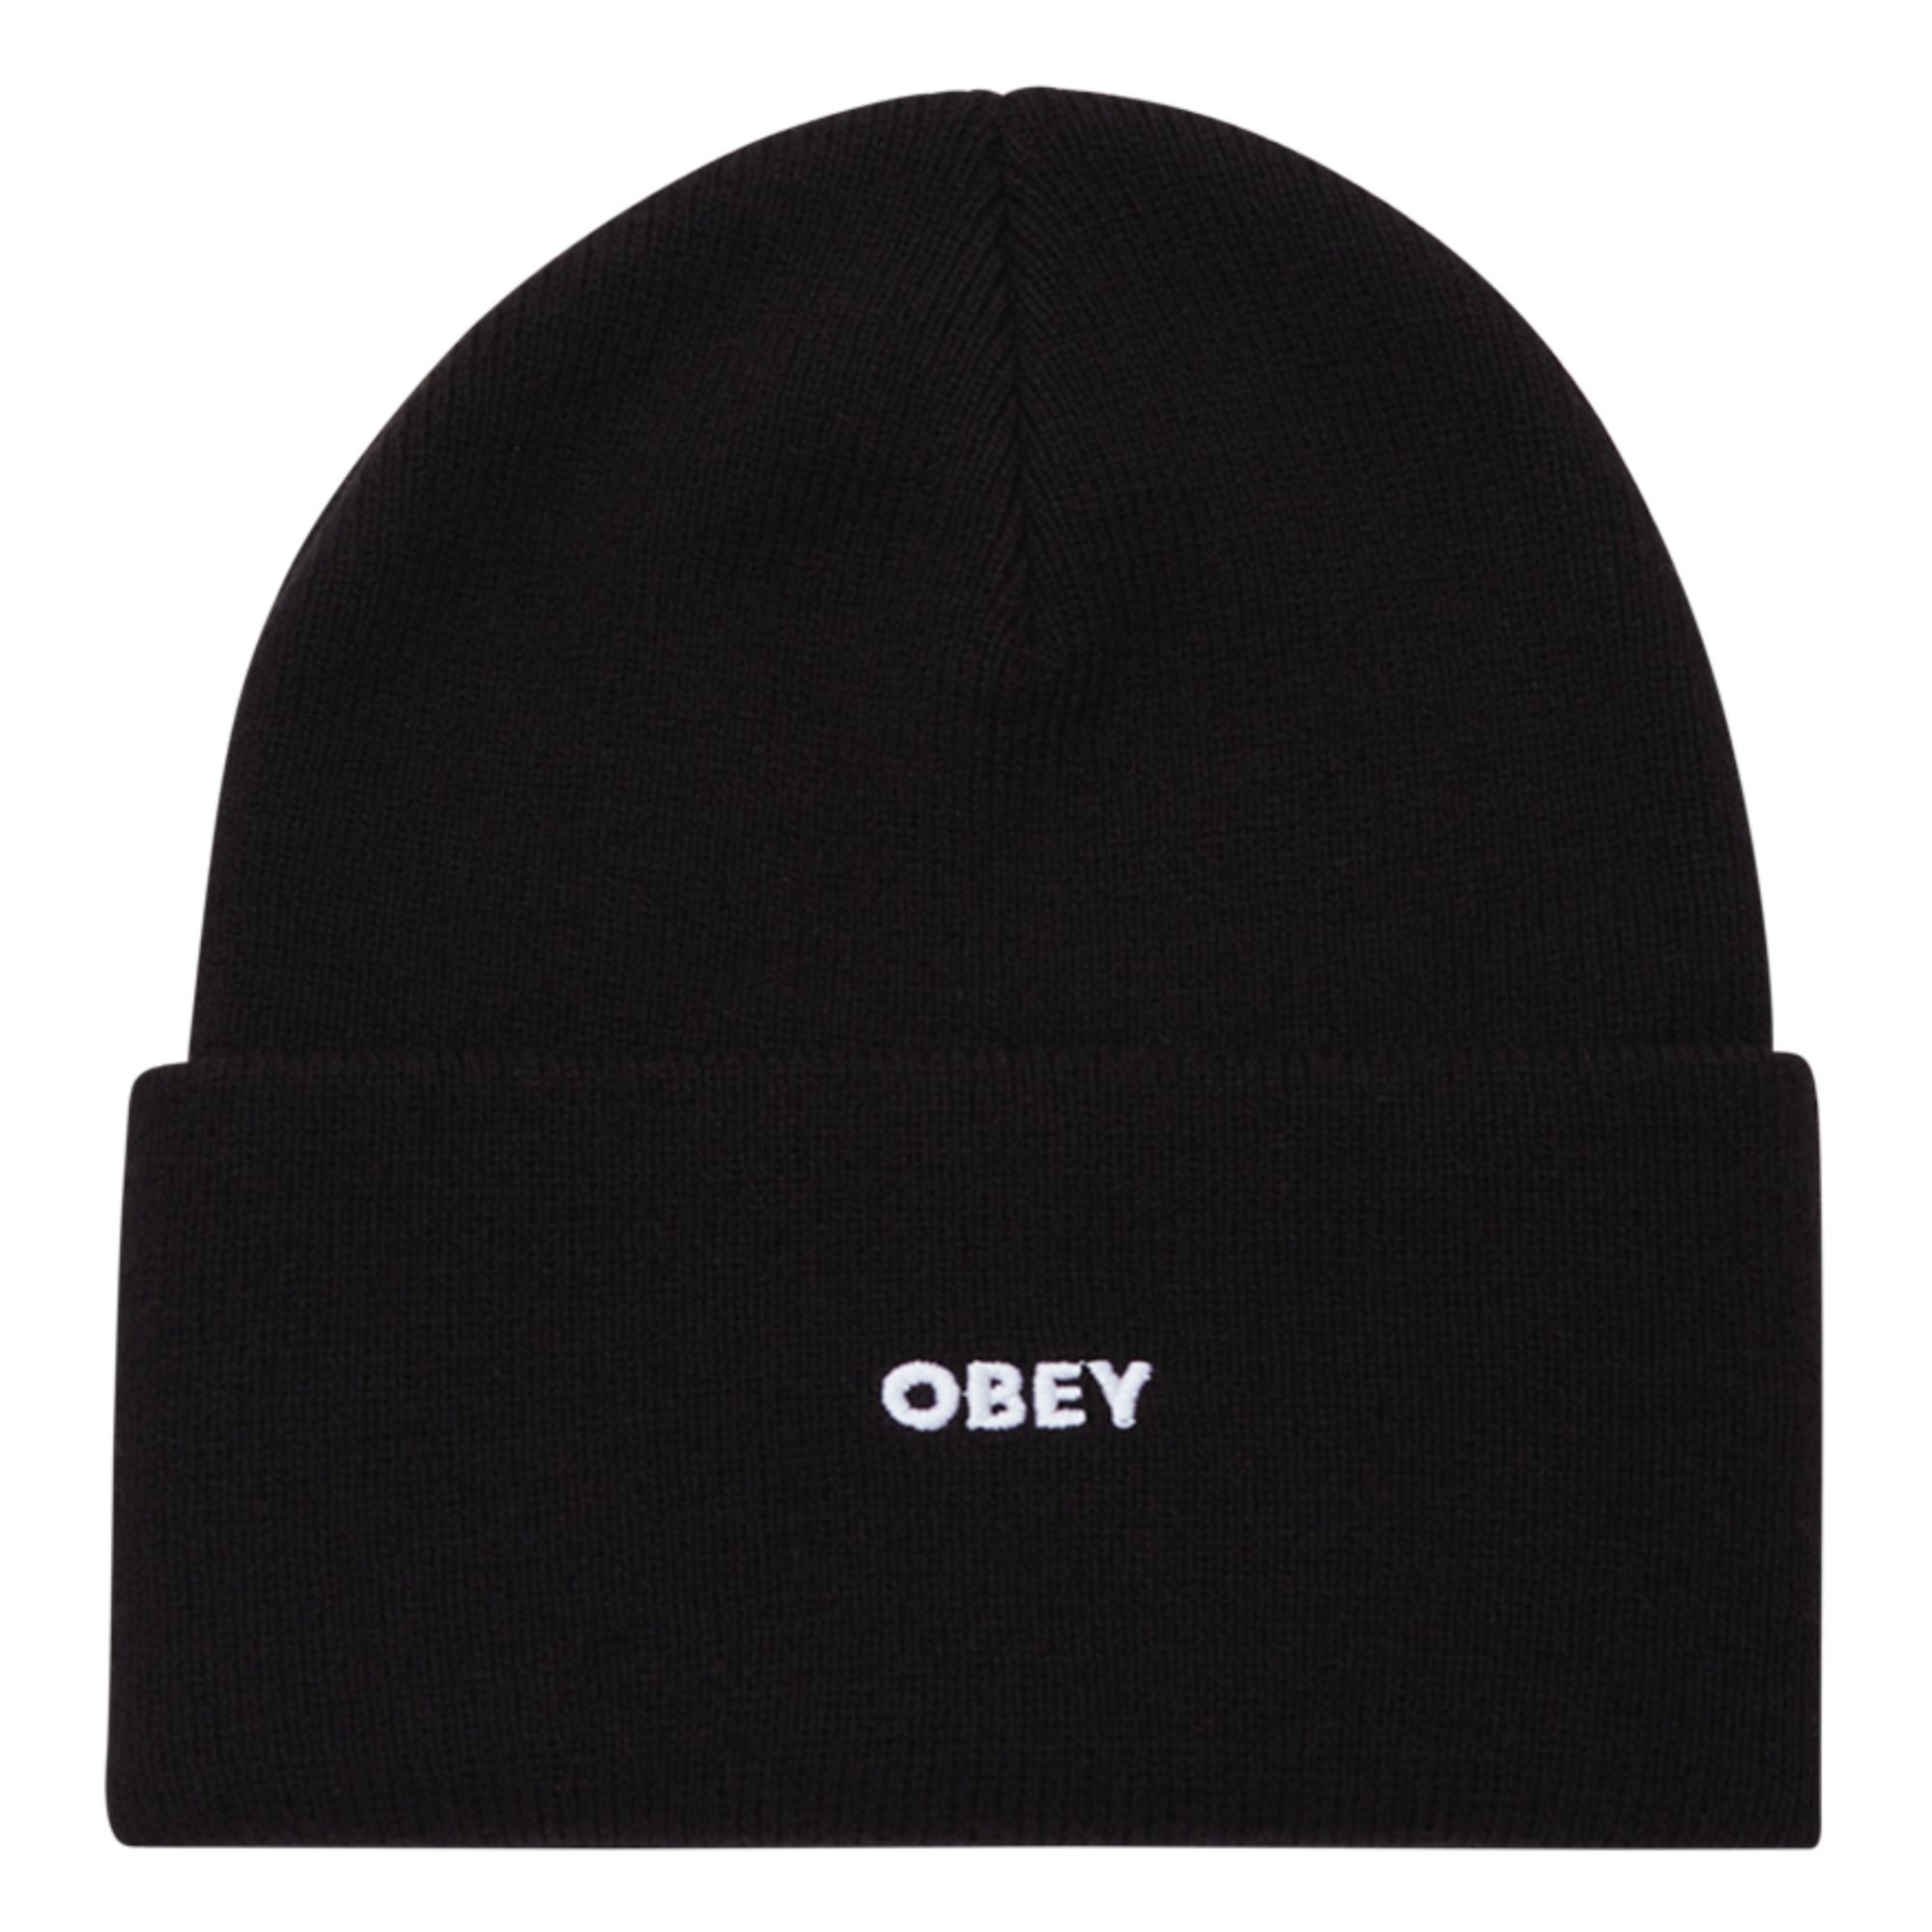 Obey - Bonnet Logo - Homme - Noir